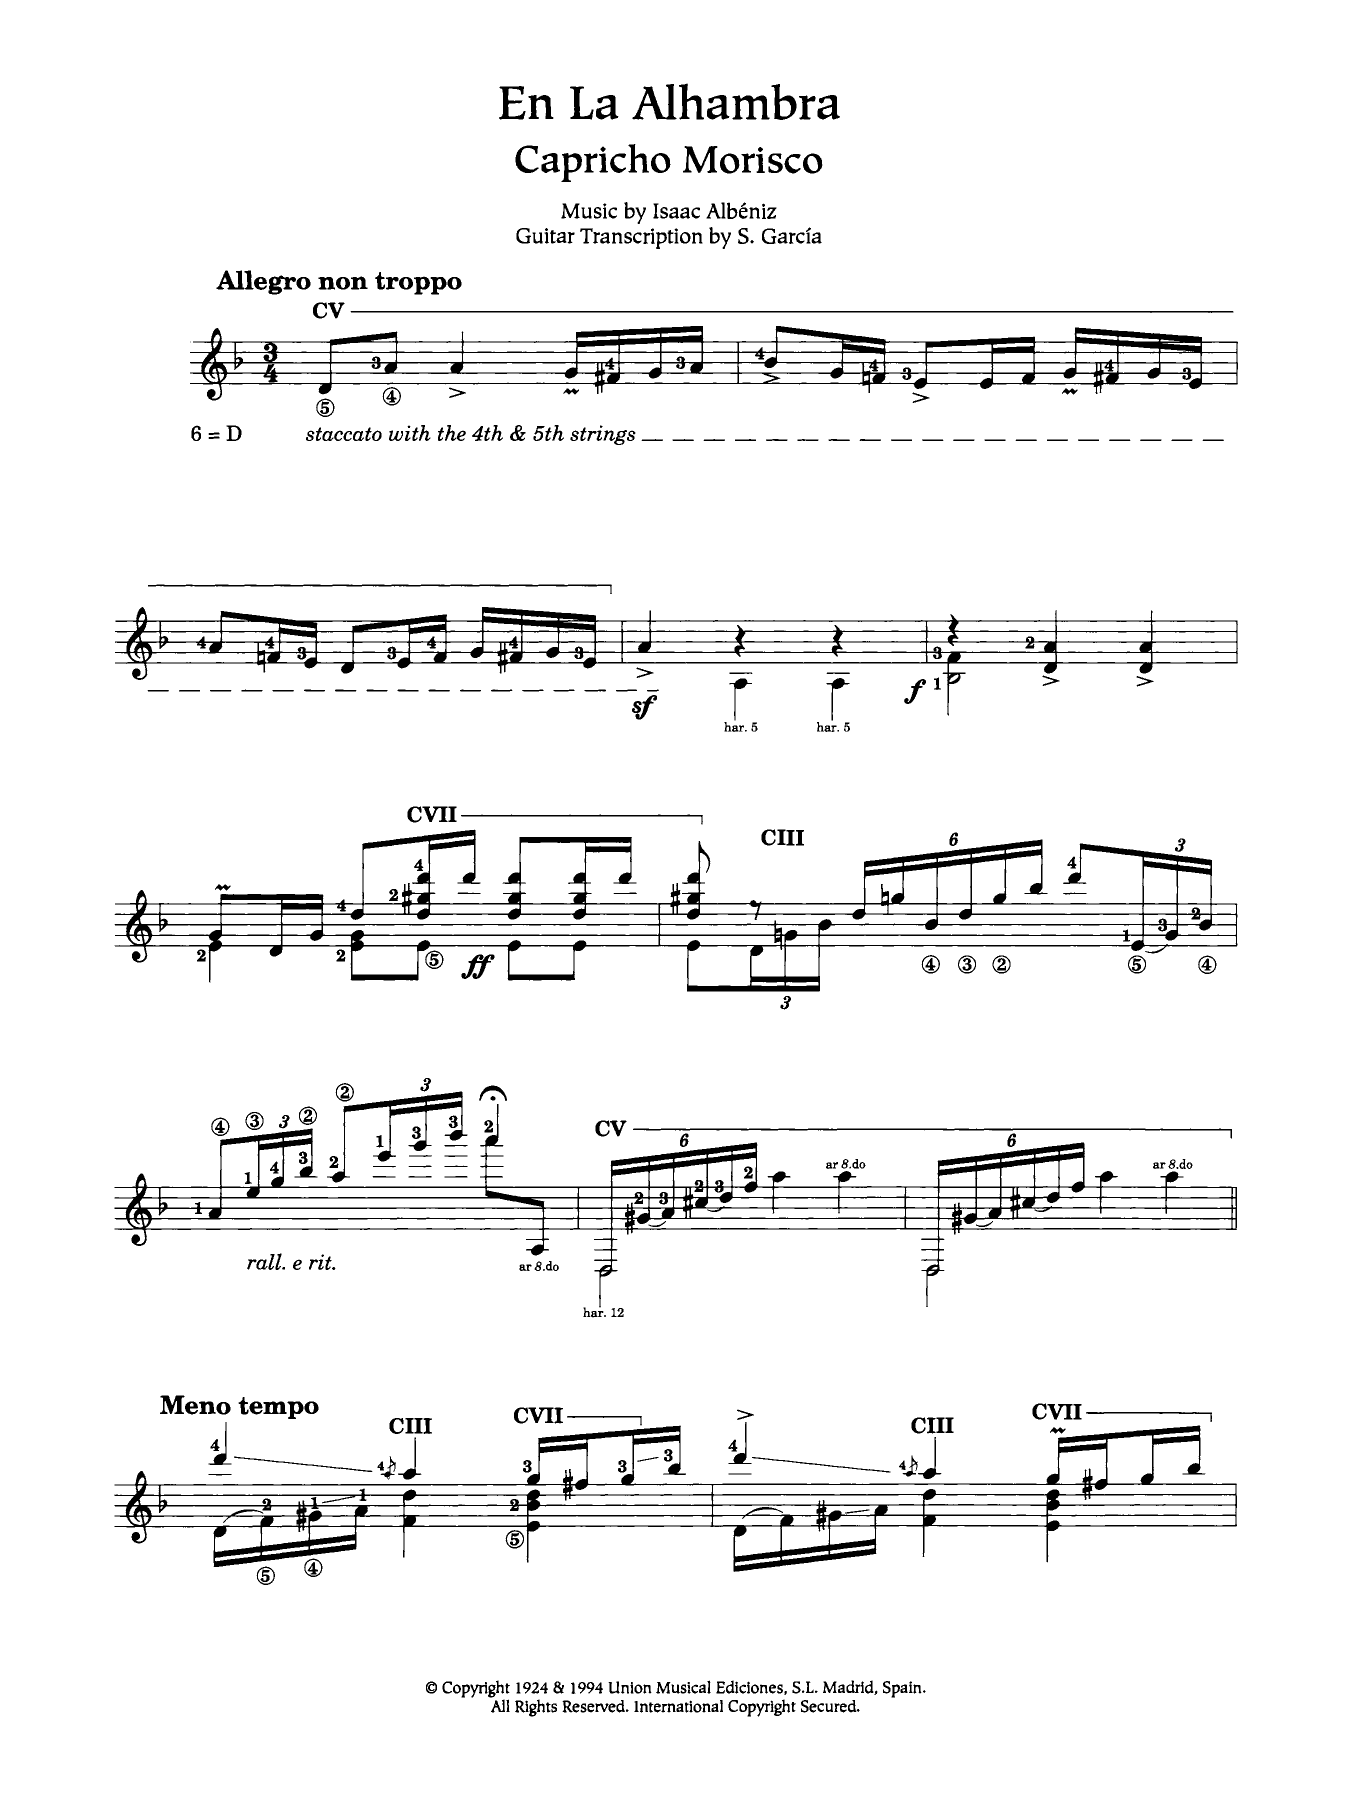 Isaac Albéniz En La Alhambra (Capricho Morisco) Sheet Music Notes & Chords for Guitar - Download or Print PDF